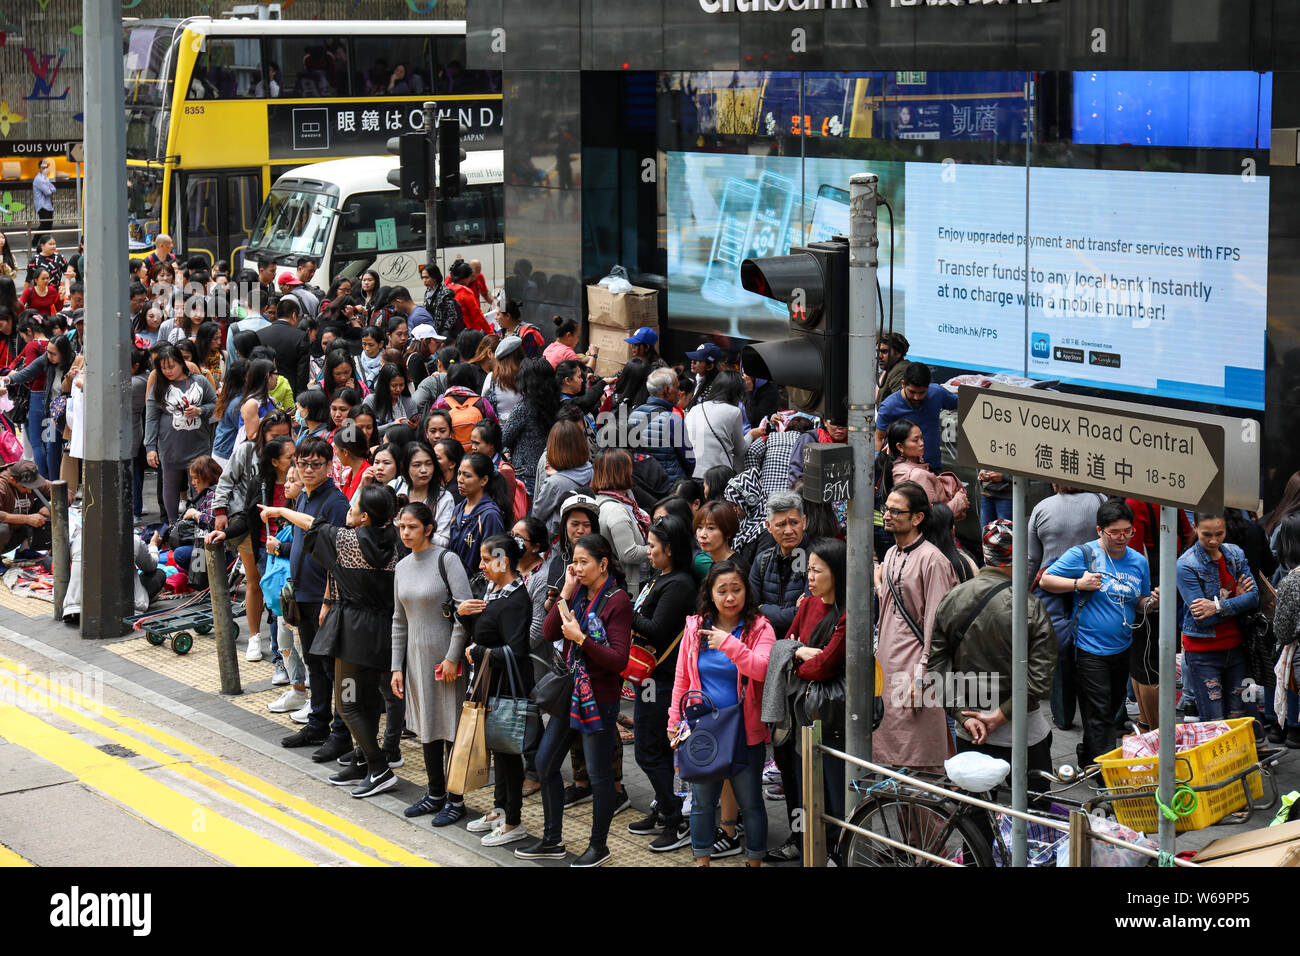 Crowded street corner in Hong Kong Stock Photo